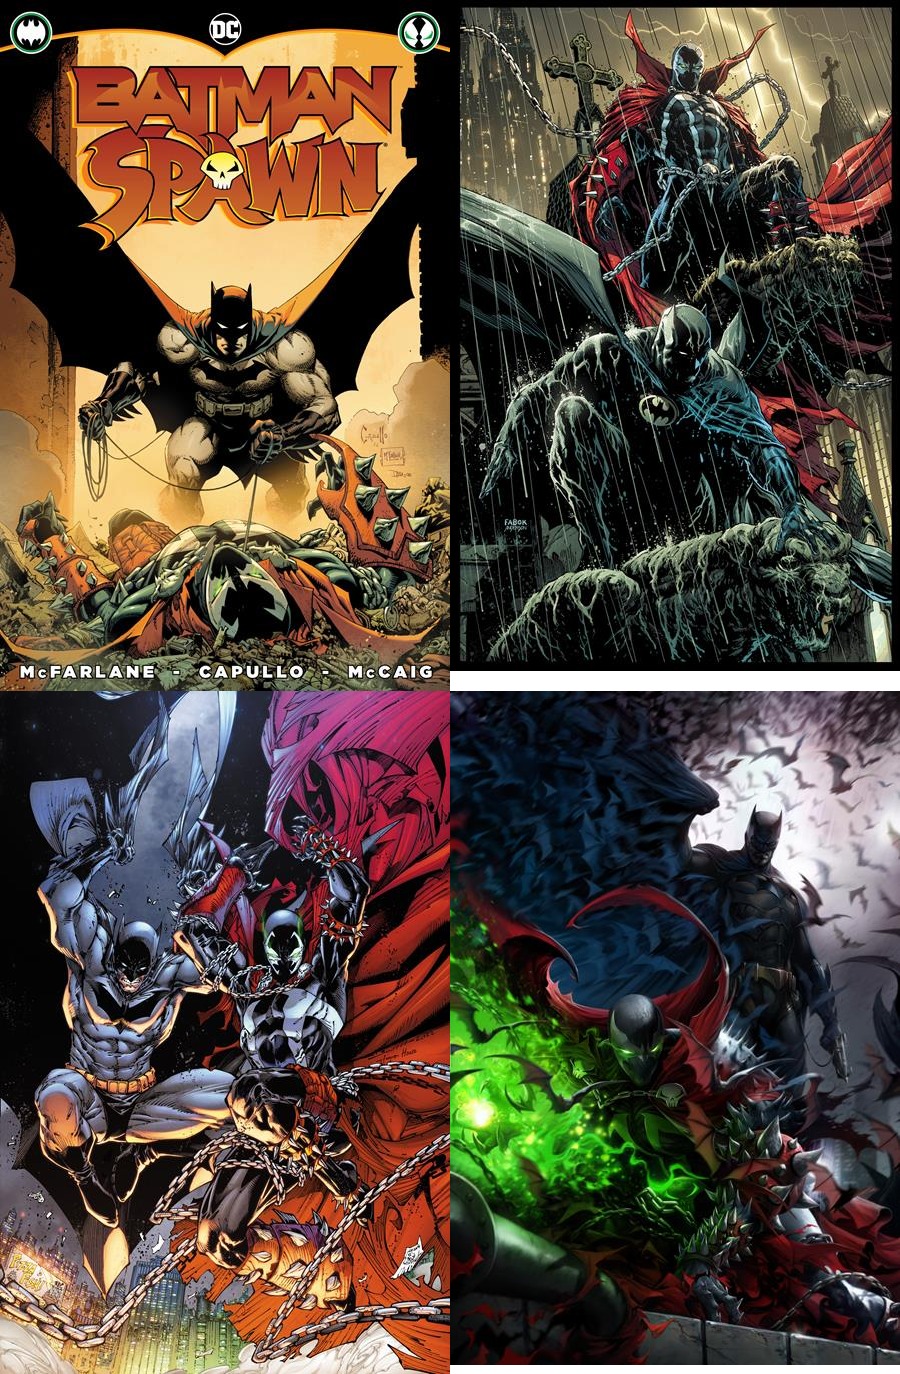 Batman Spanw #1 1:50 Variant Set of 13 Covers